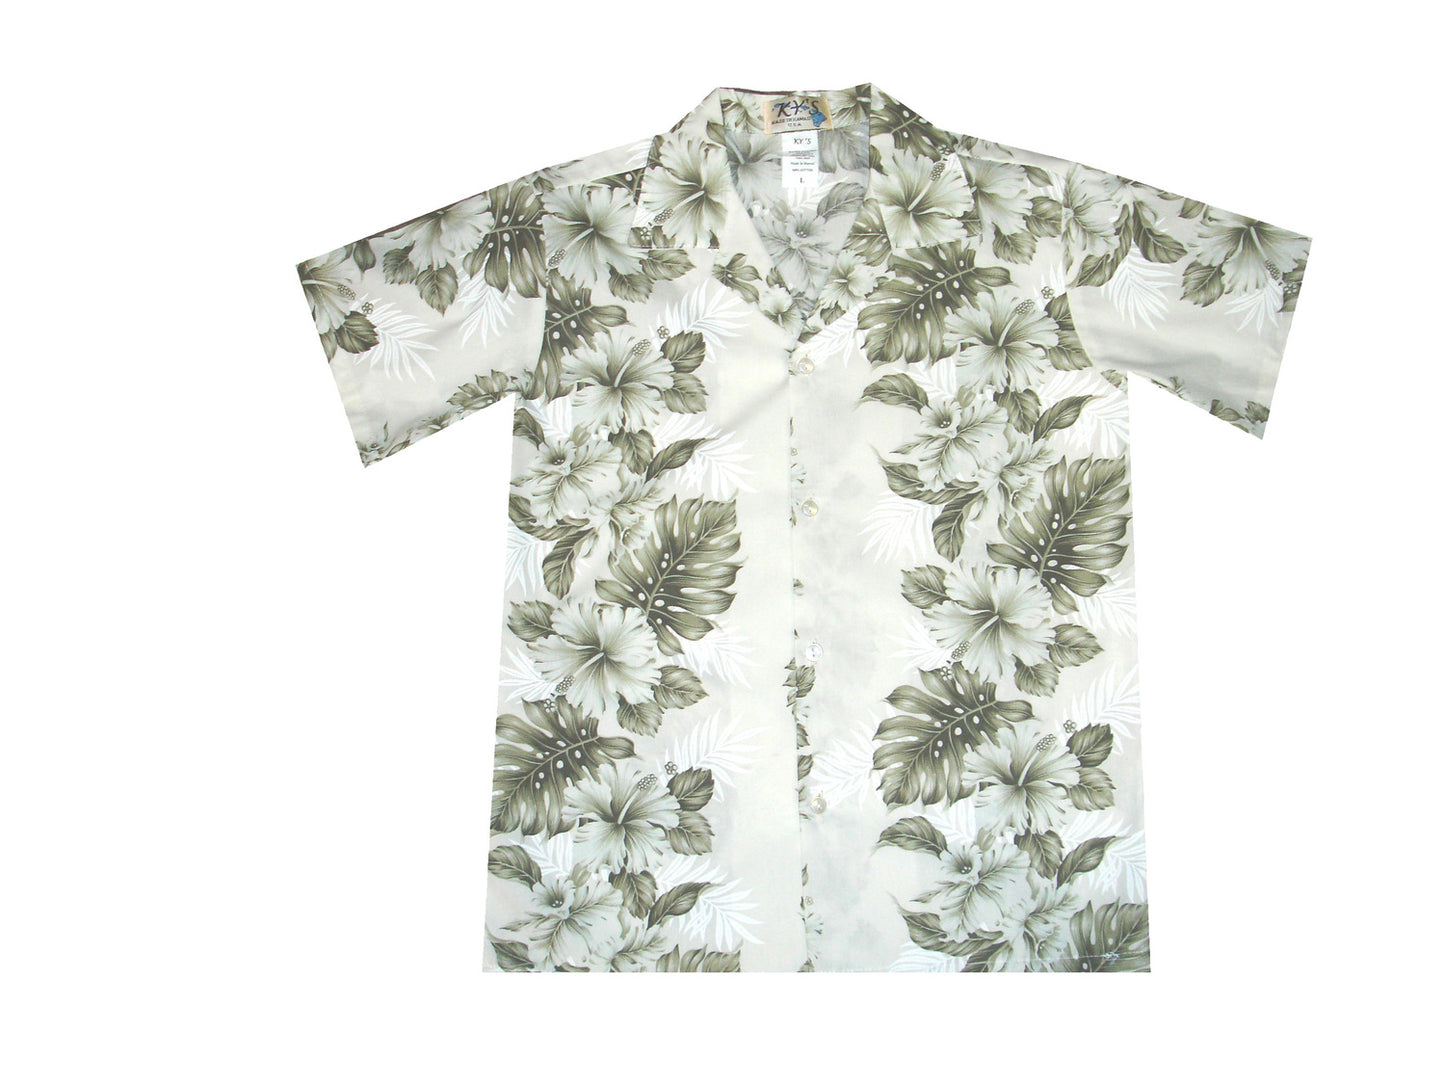 100% Cotton Made in Hawaii Boy Shirts and Boy Cabana Sets